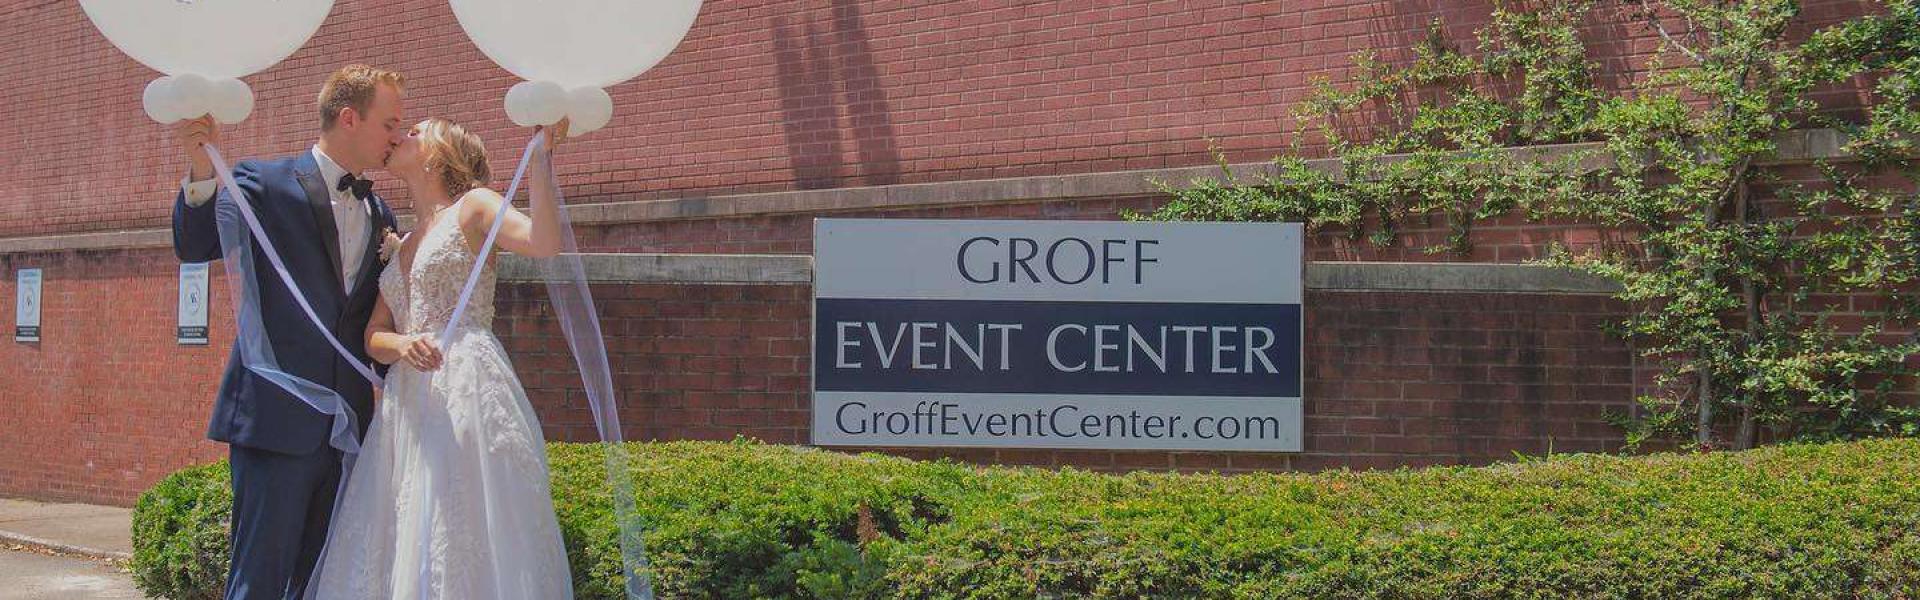 Groff Event Center Main Image